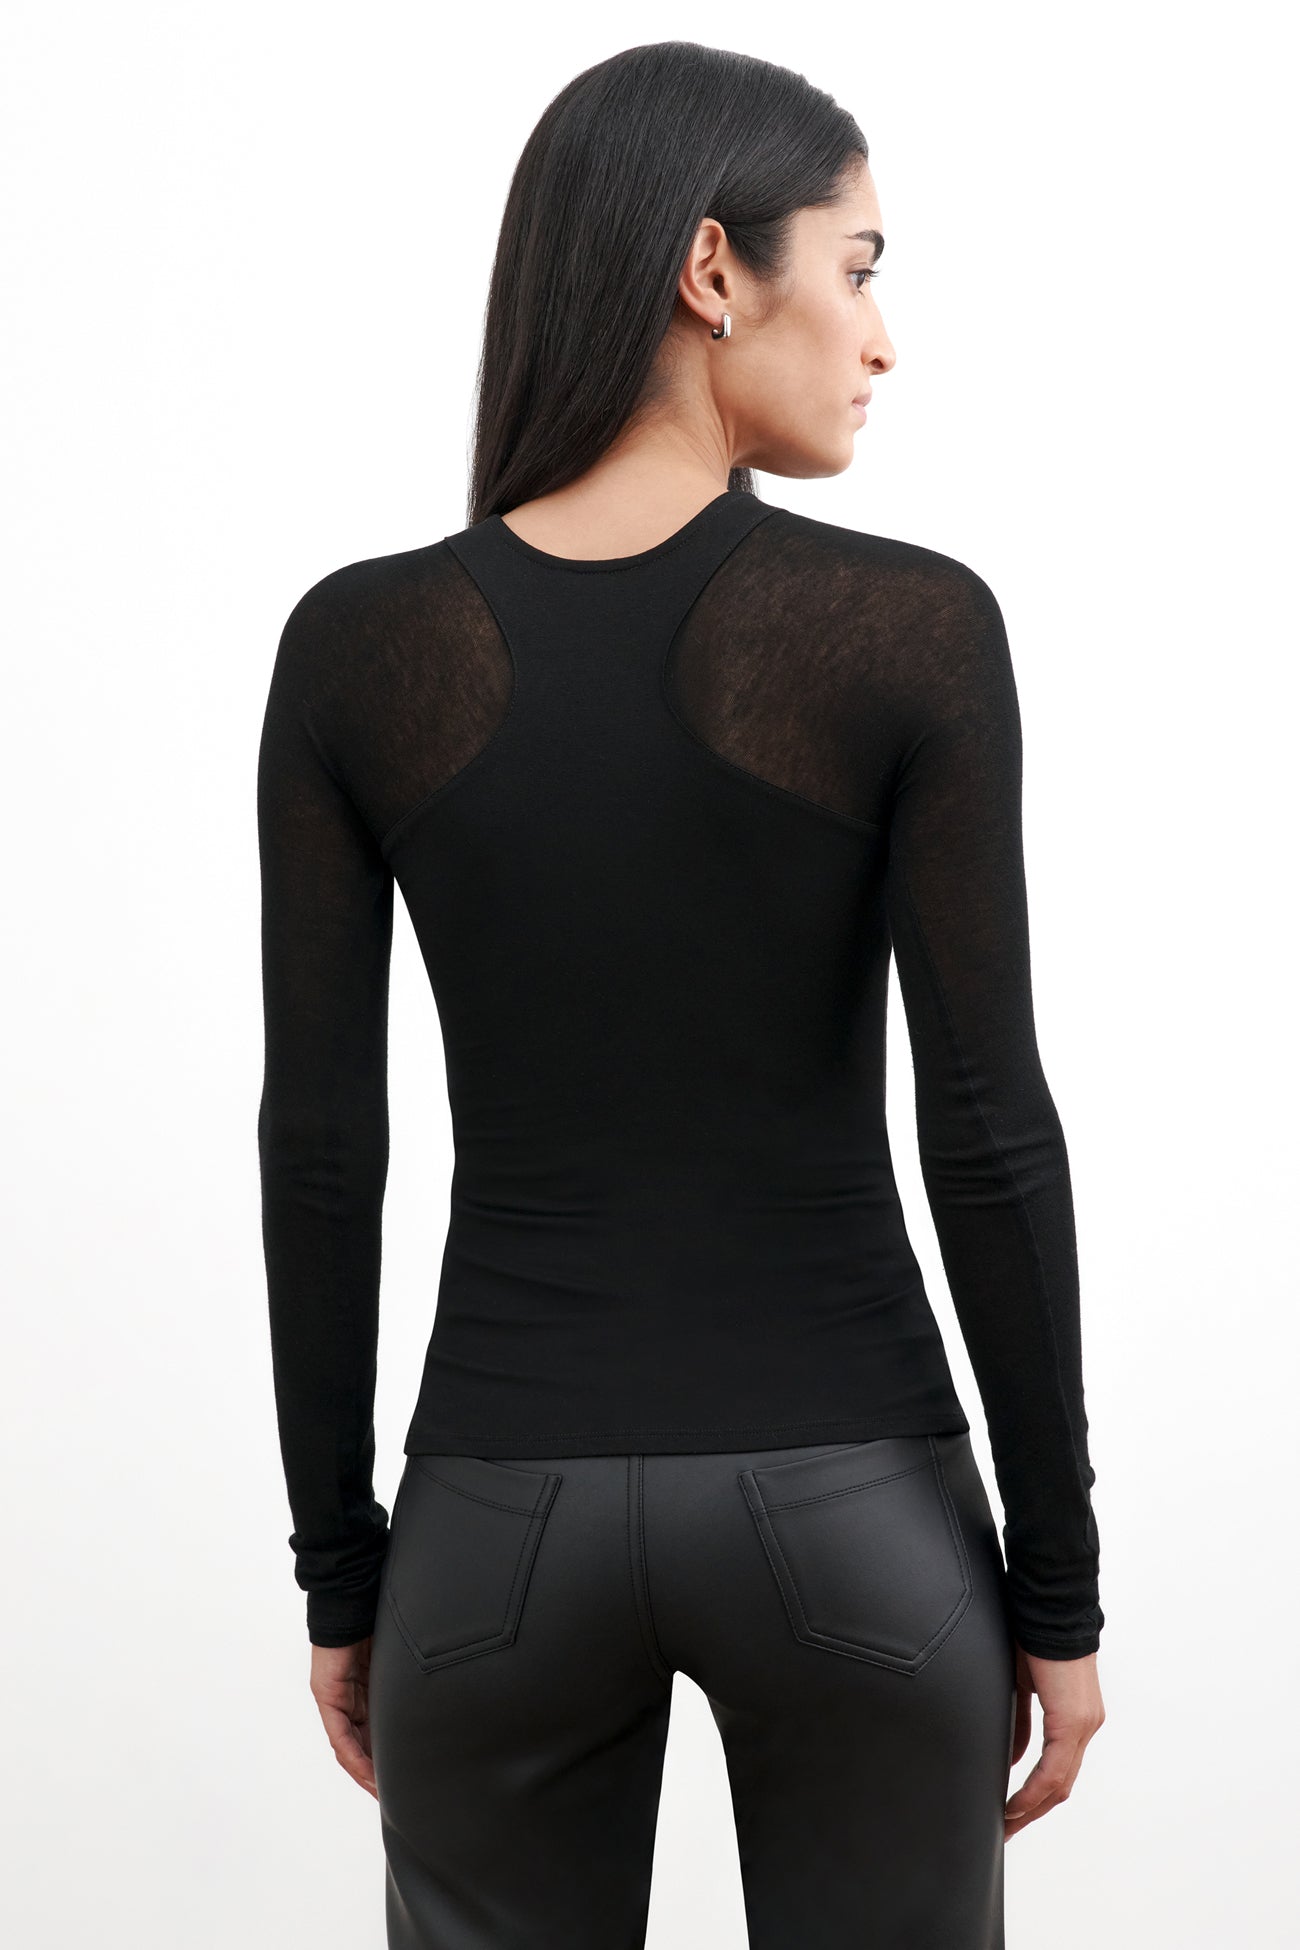 Black Long Sleeve Sheer Panel Top - Yada Top | Marcella